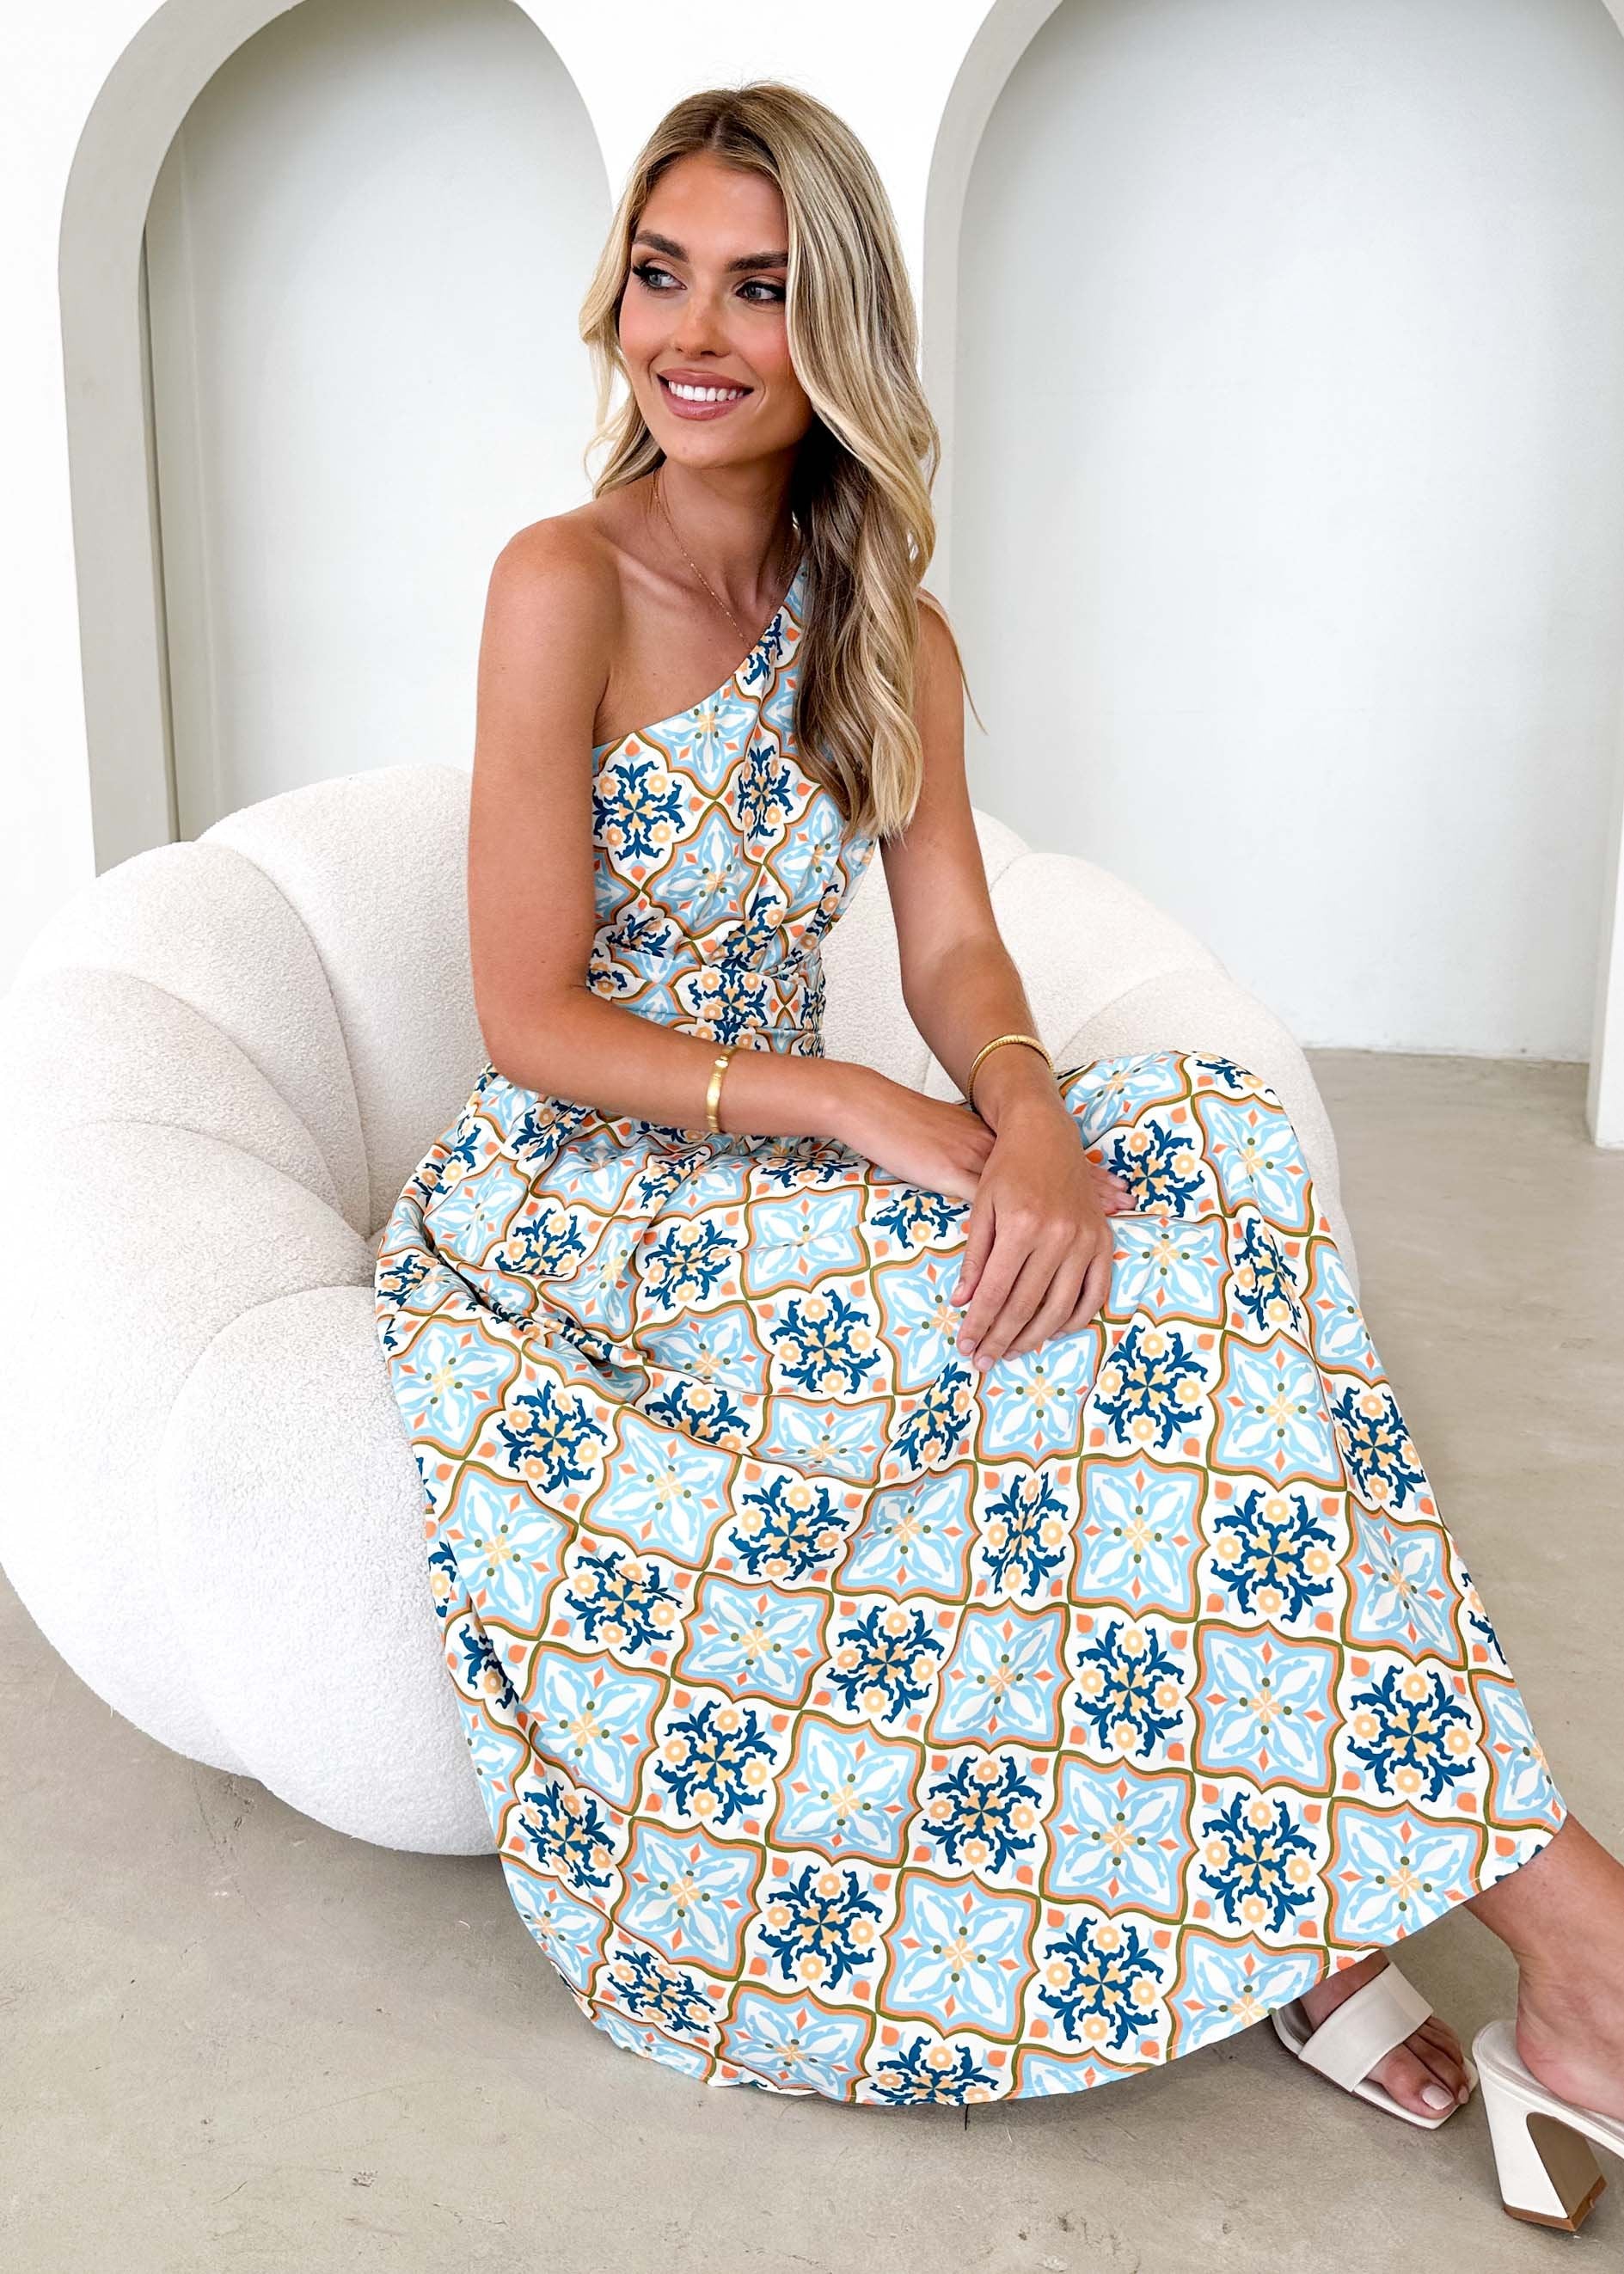 Oara One Shoulder Maxi Dress - Moroccan Tile